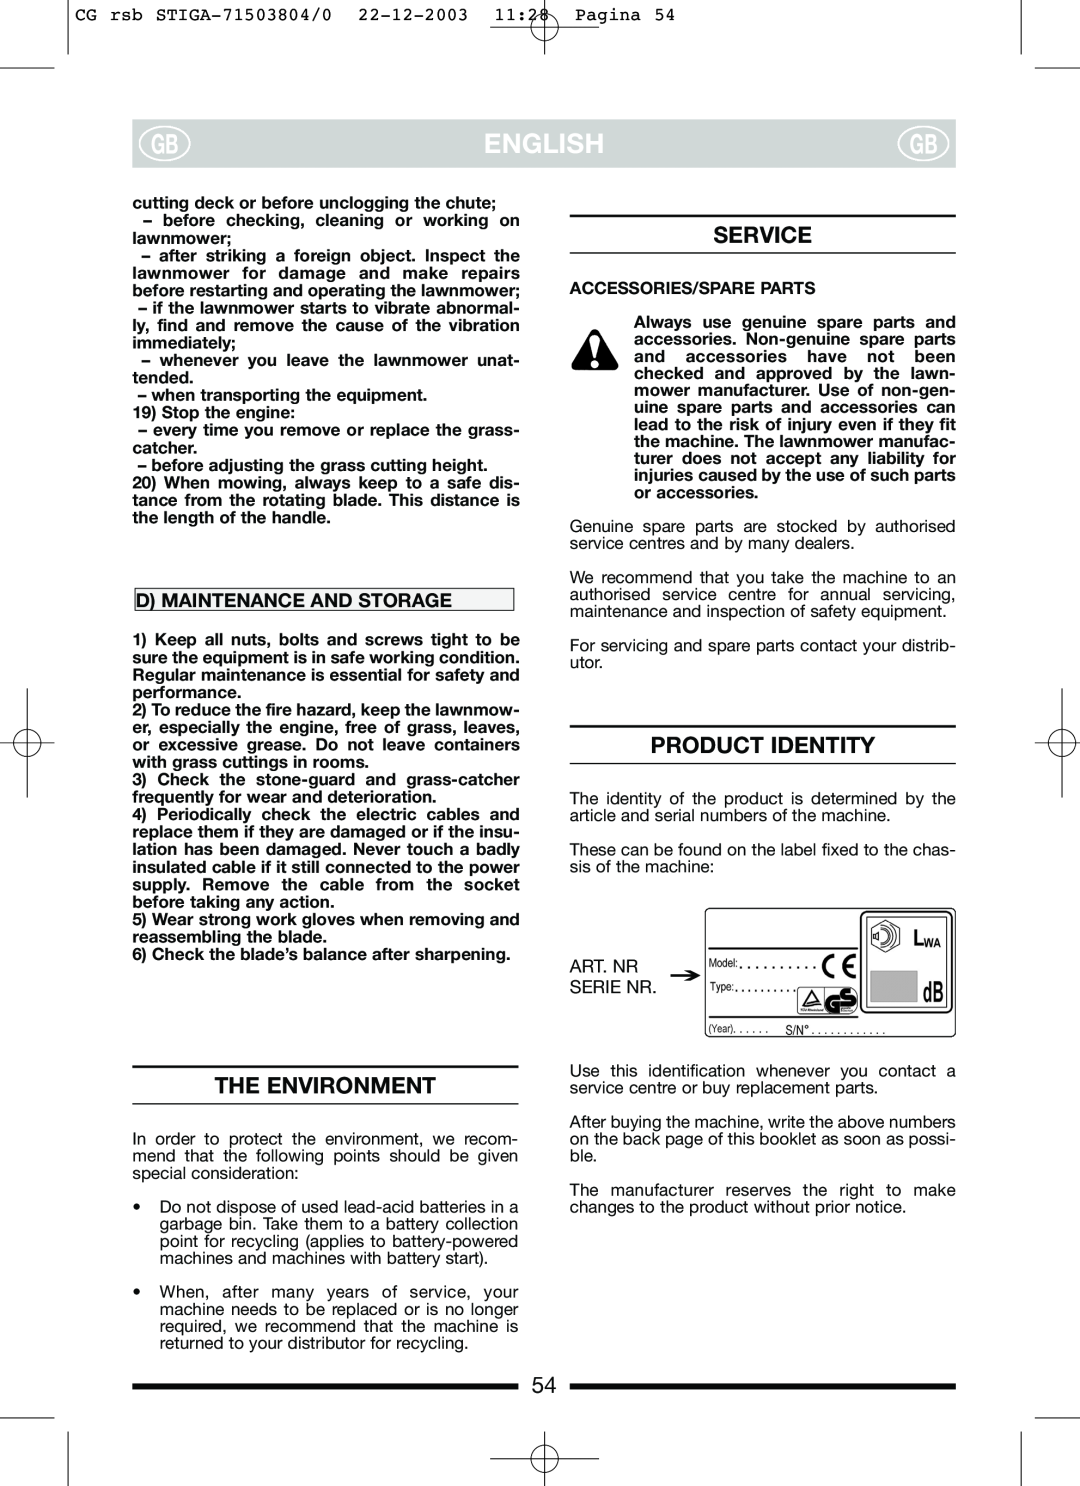 Stiga 45EL, 45SEL manual The Environment, Service, Product Identity, Dmaintenance And Storage, English, Art. Nr, Serie Nr 